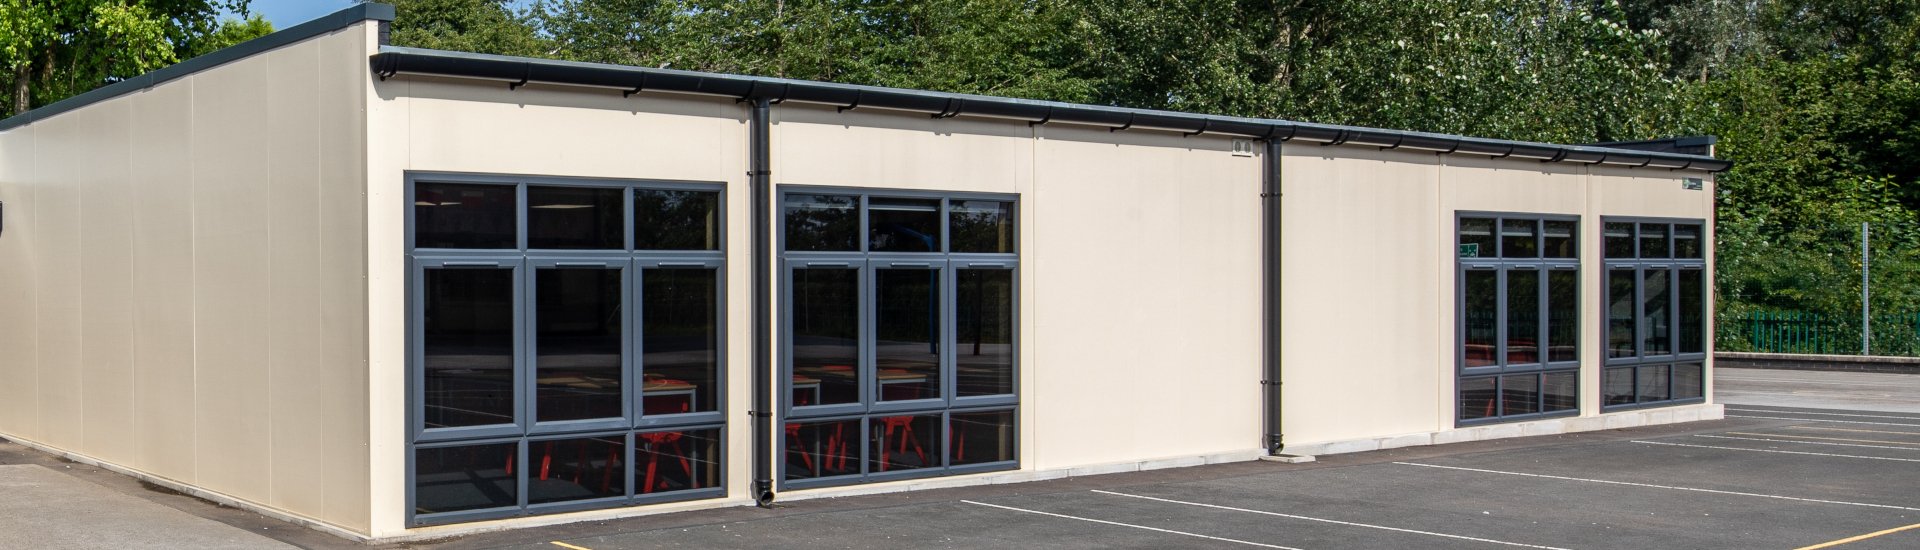 Image of modular building temporary classroom or permanent classroom